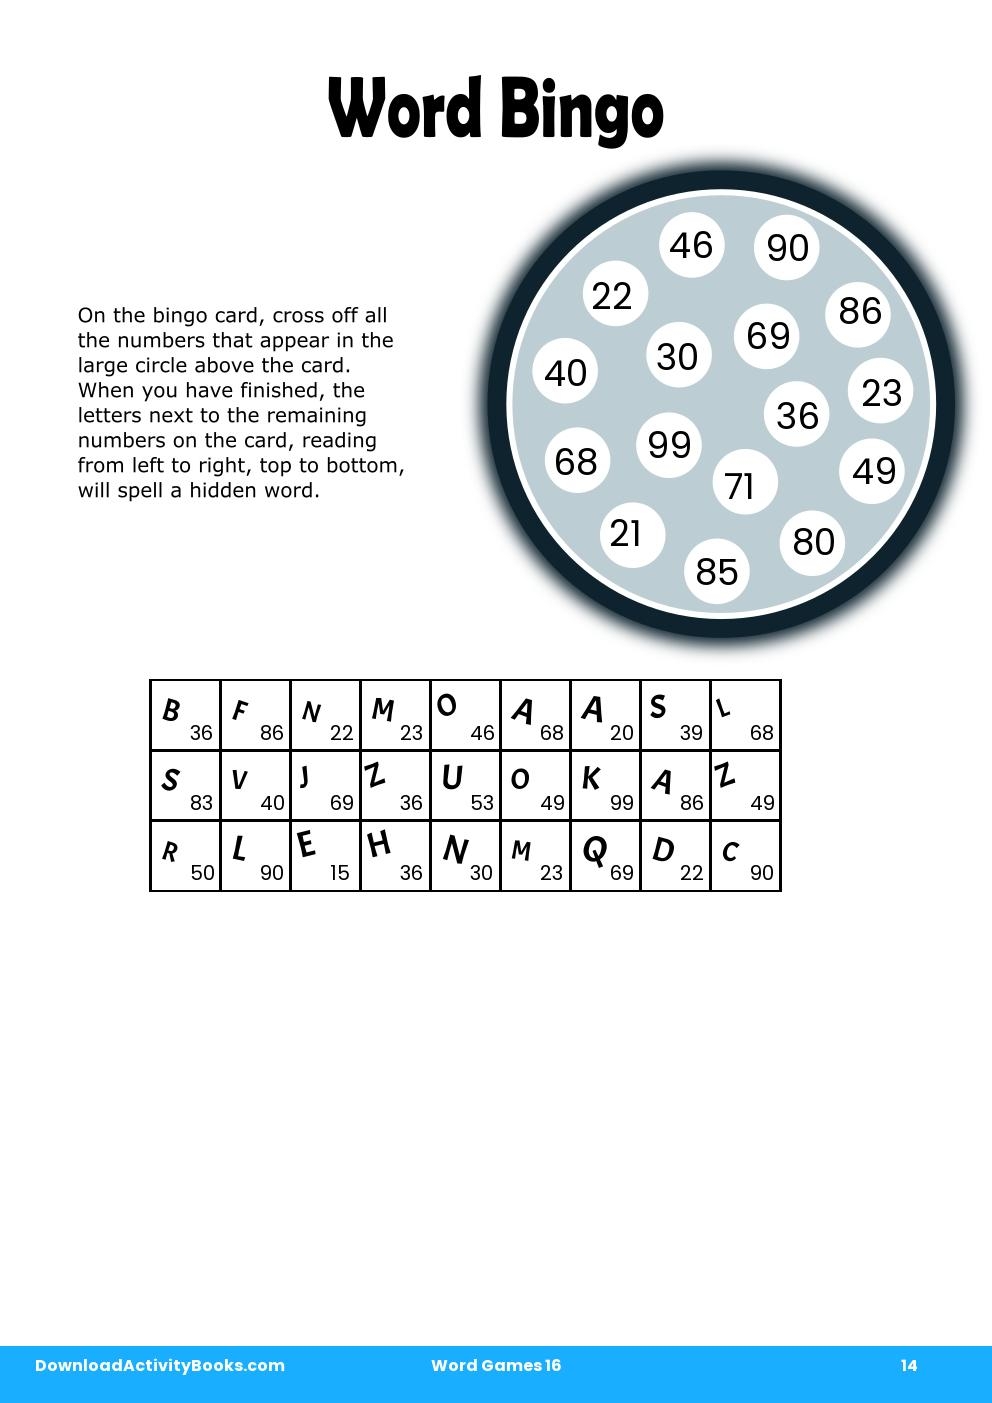 Word Bingo in Word Games 16